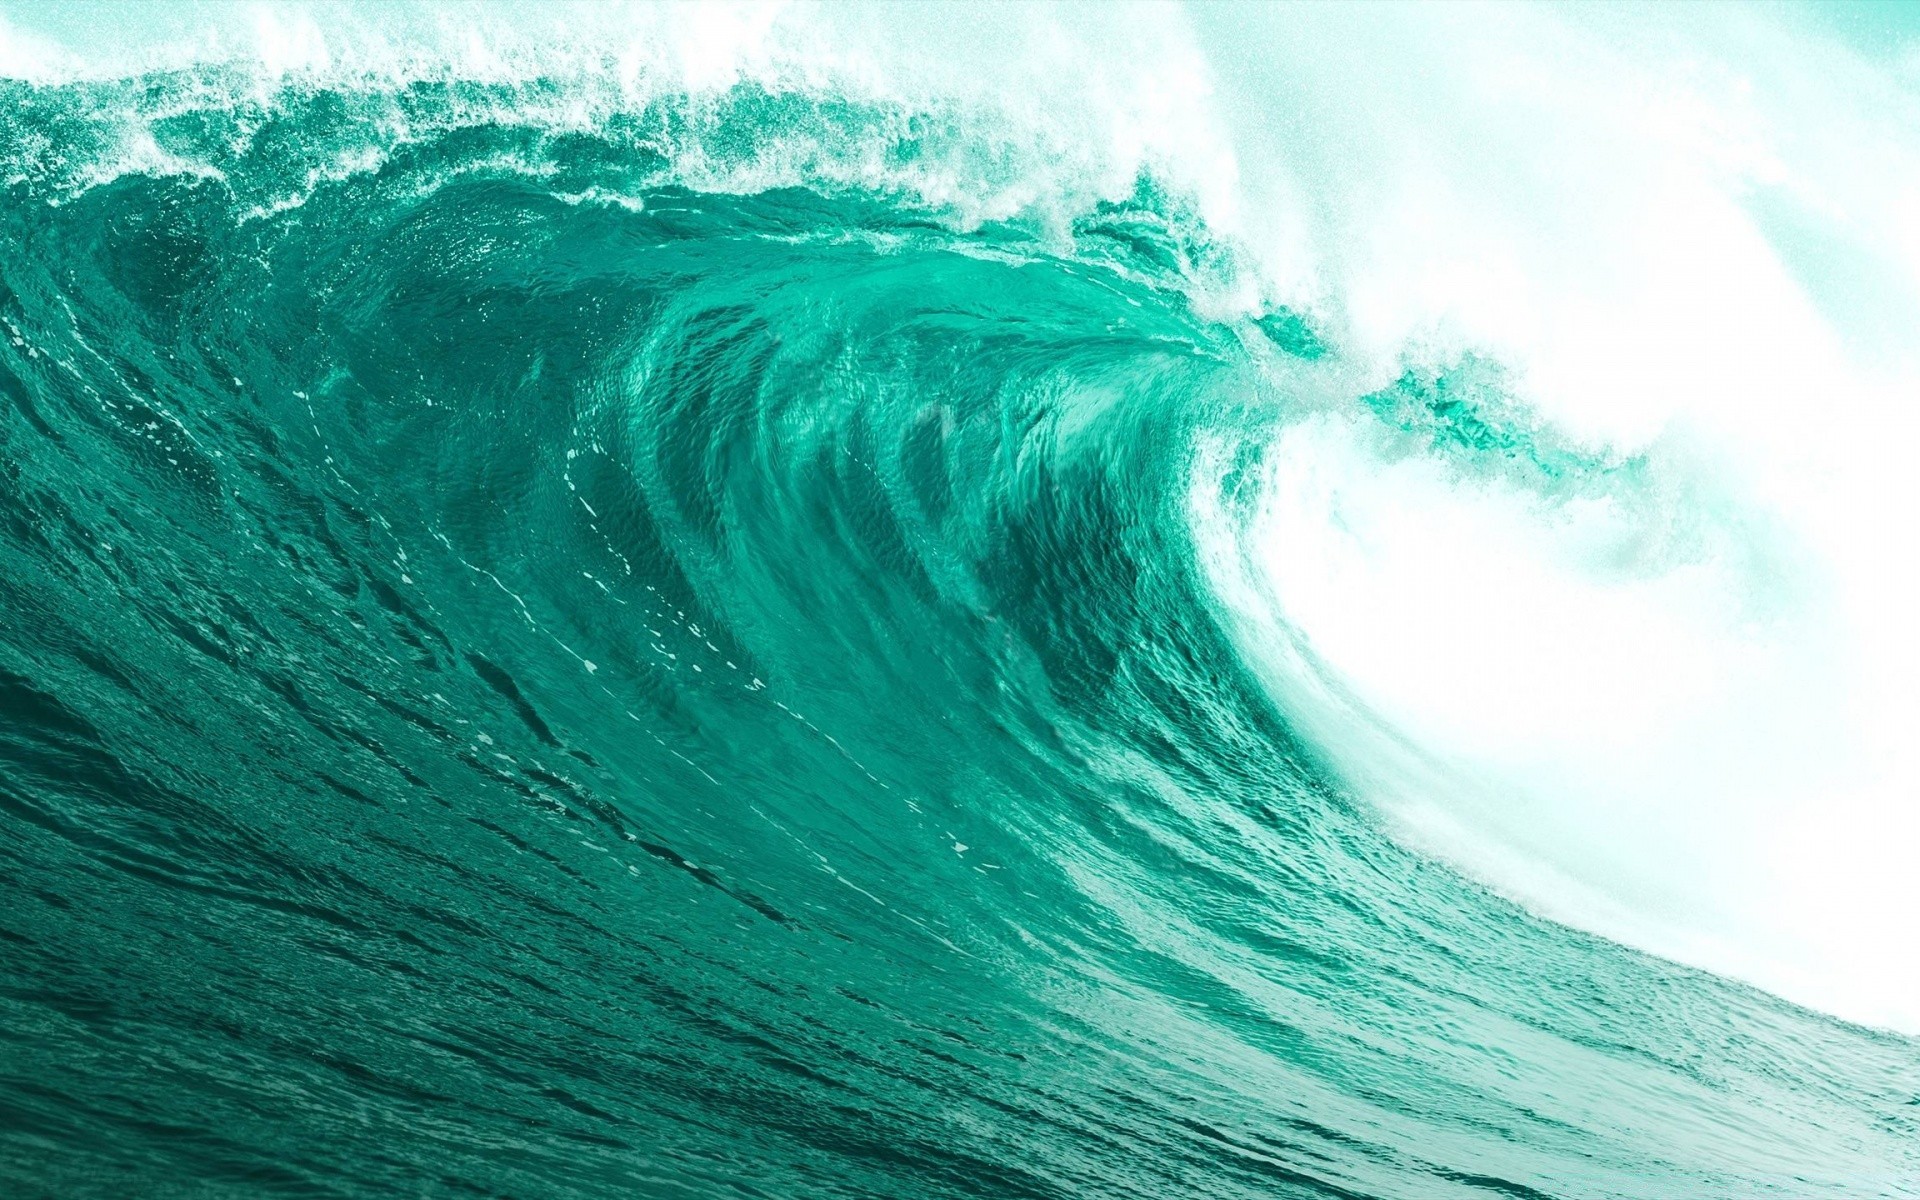 water wave splash sea surf nature ocean abstract desktop foam motion turquoise summer beach wet